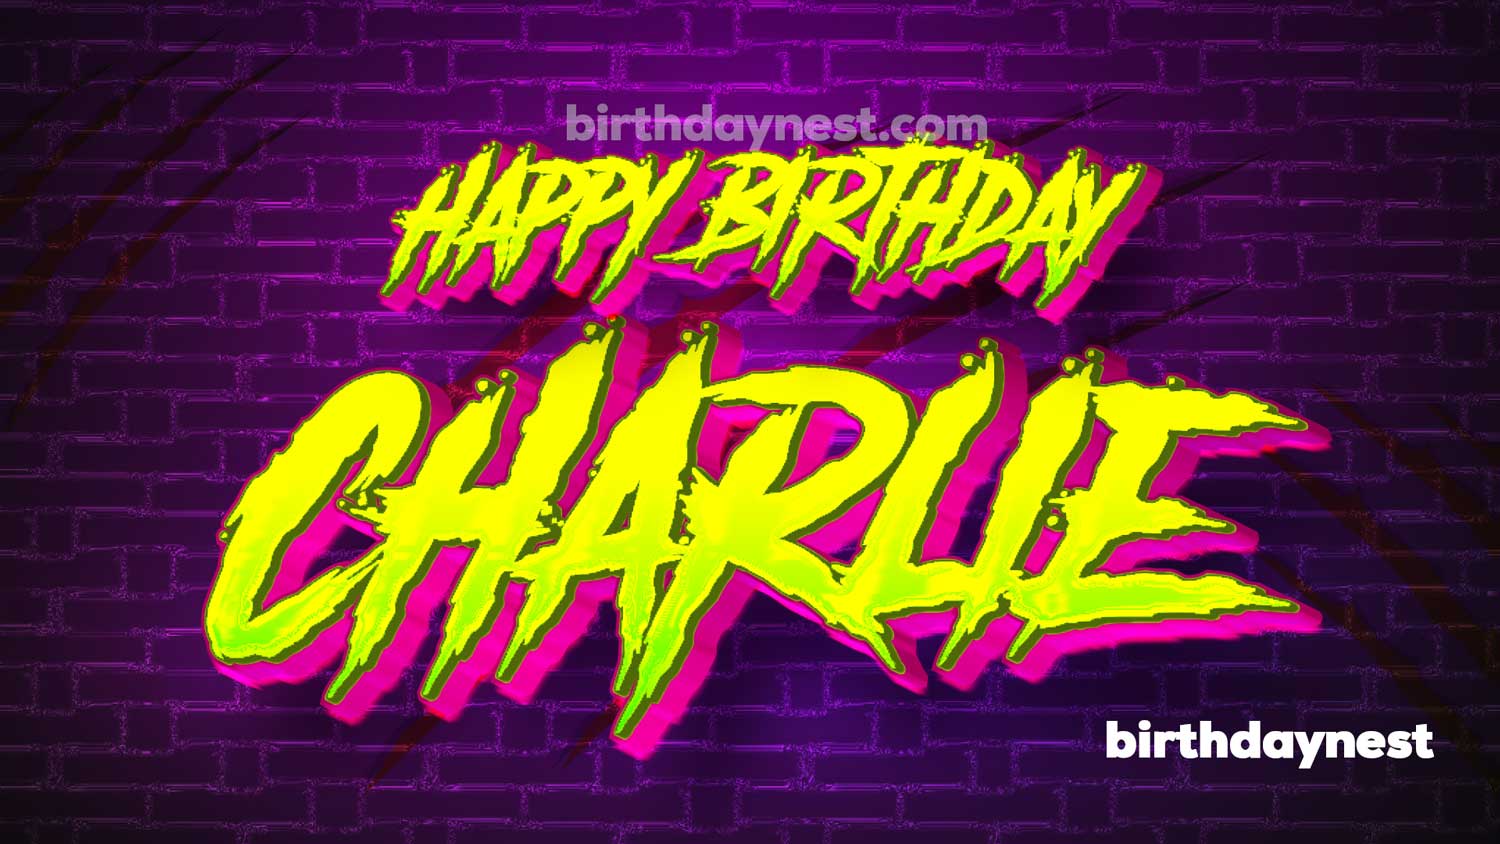 Charlie Birthday Meme